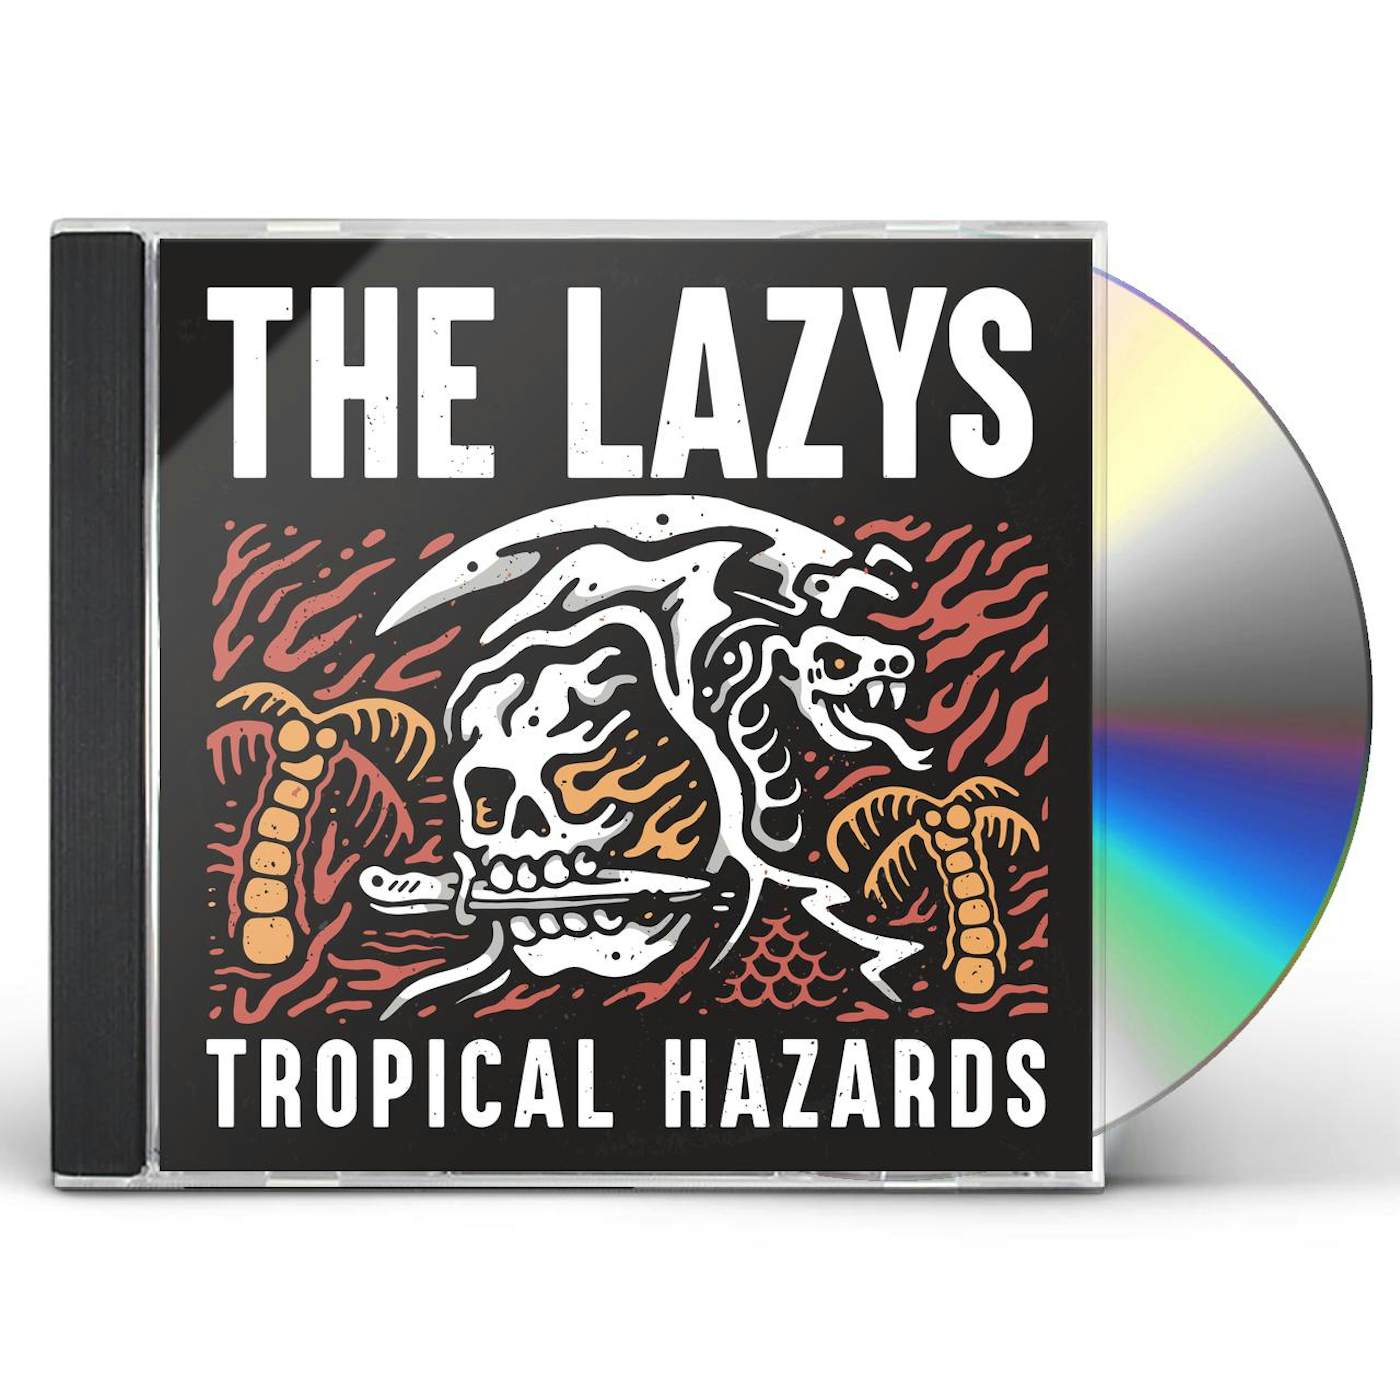 The Lazys TROPICAL HAZARDS CD